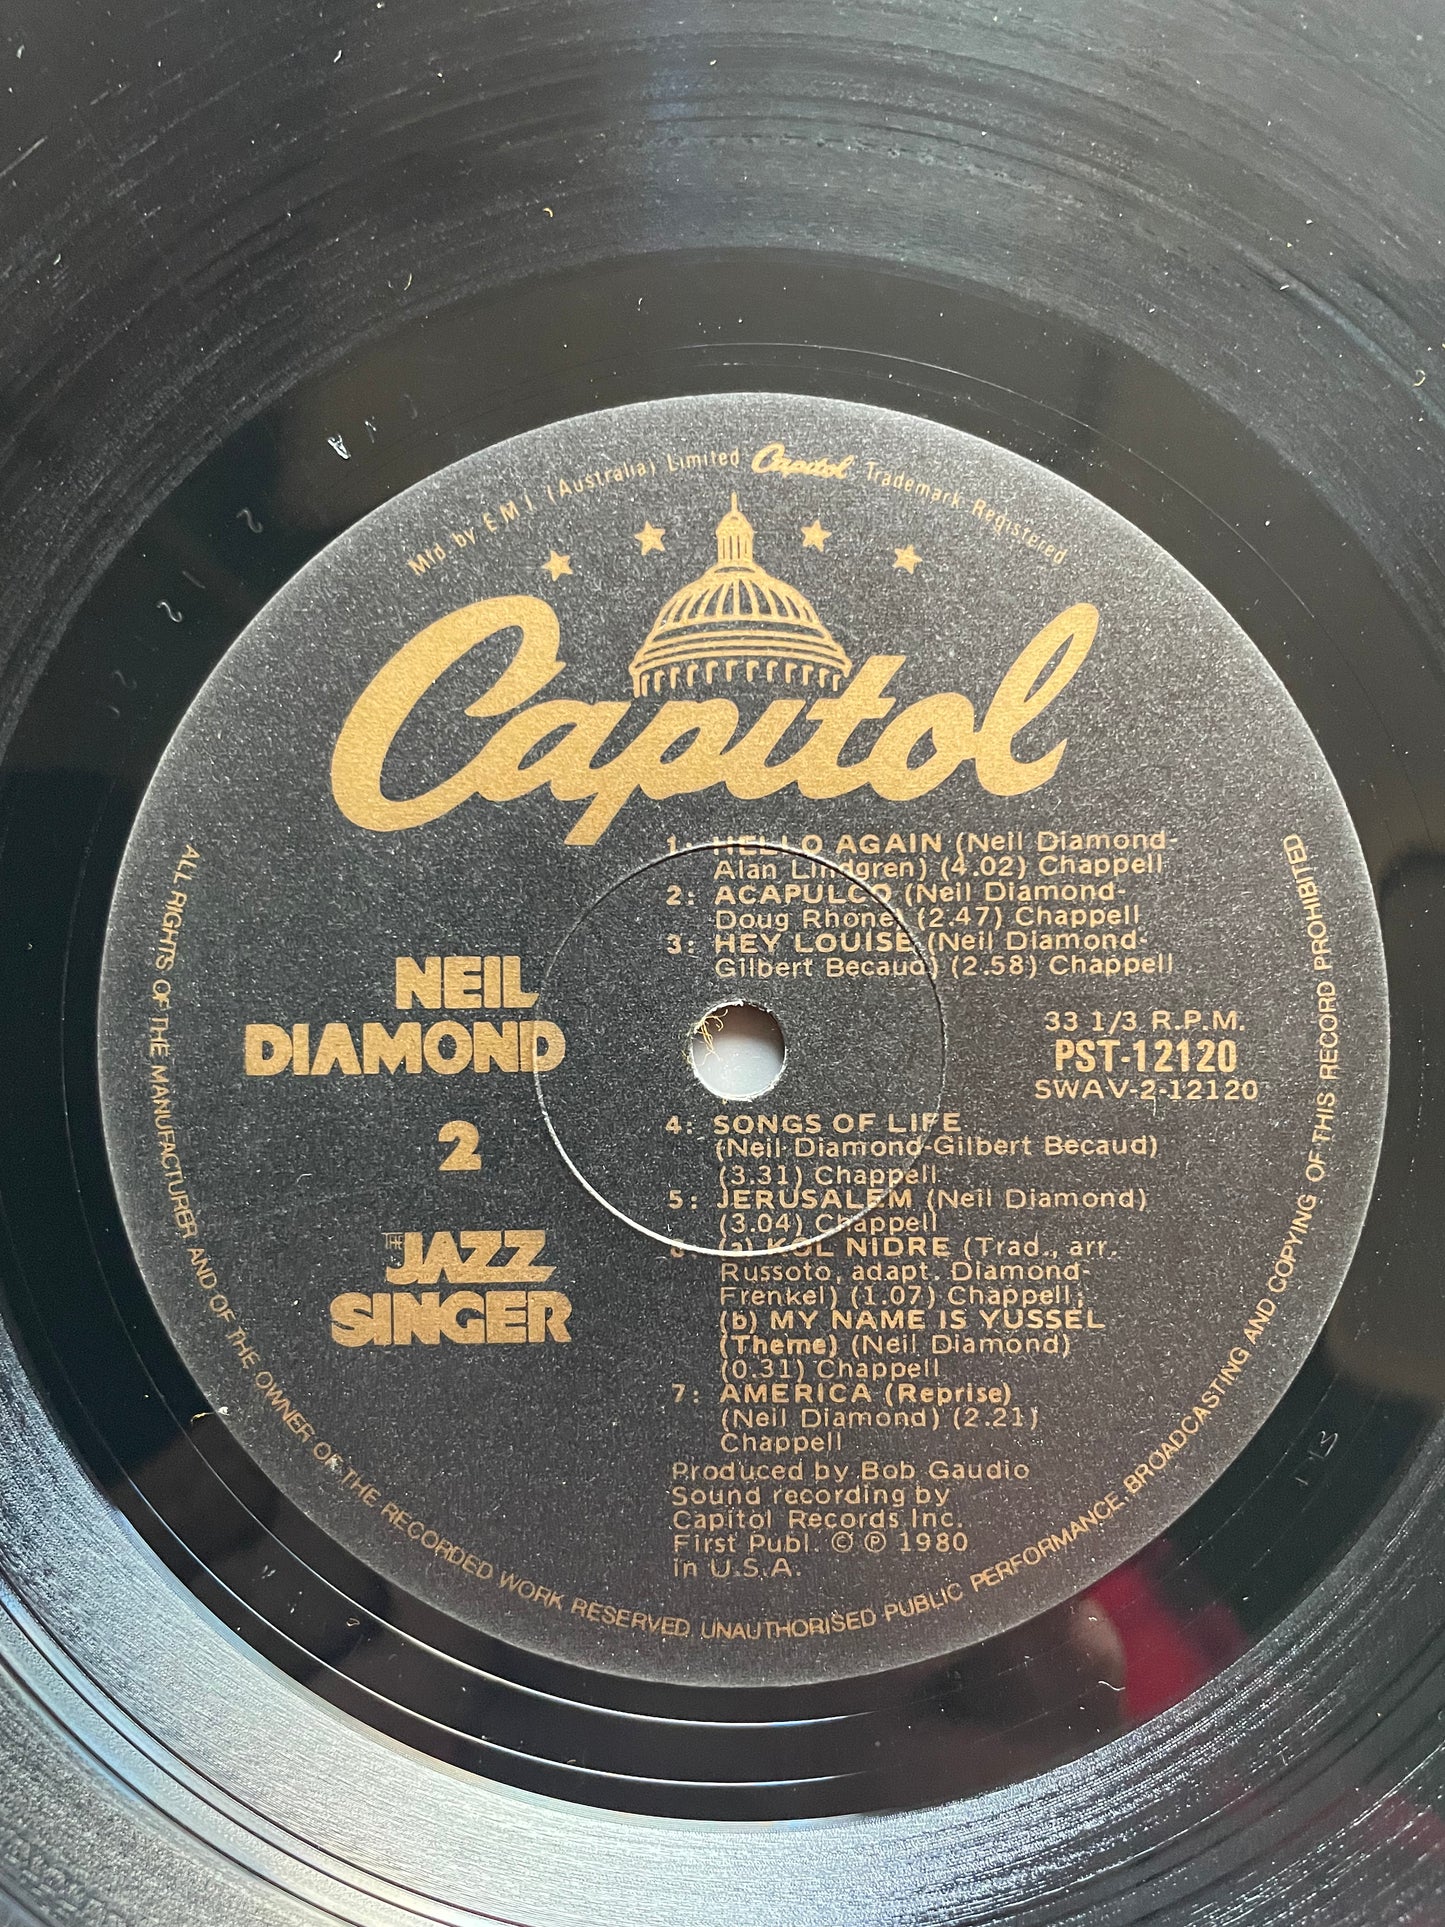 Vinyl Record LP Neil Diamond The Jazz Singer 1980